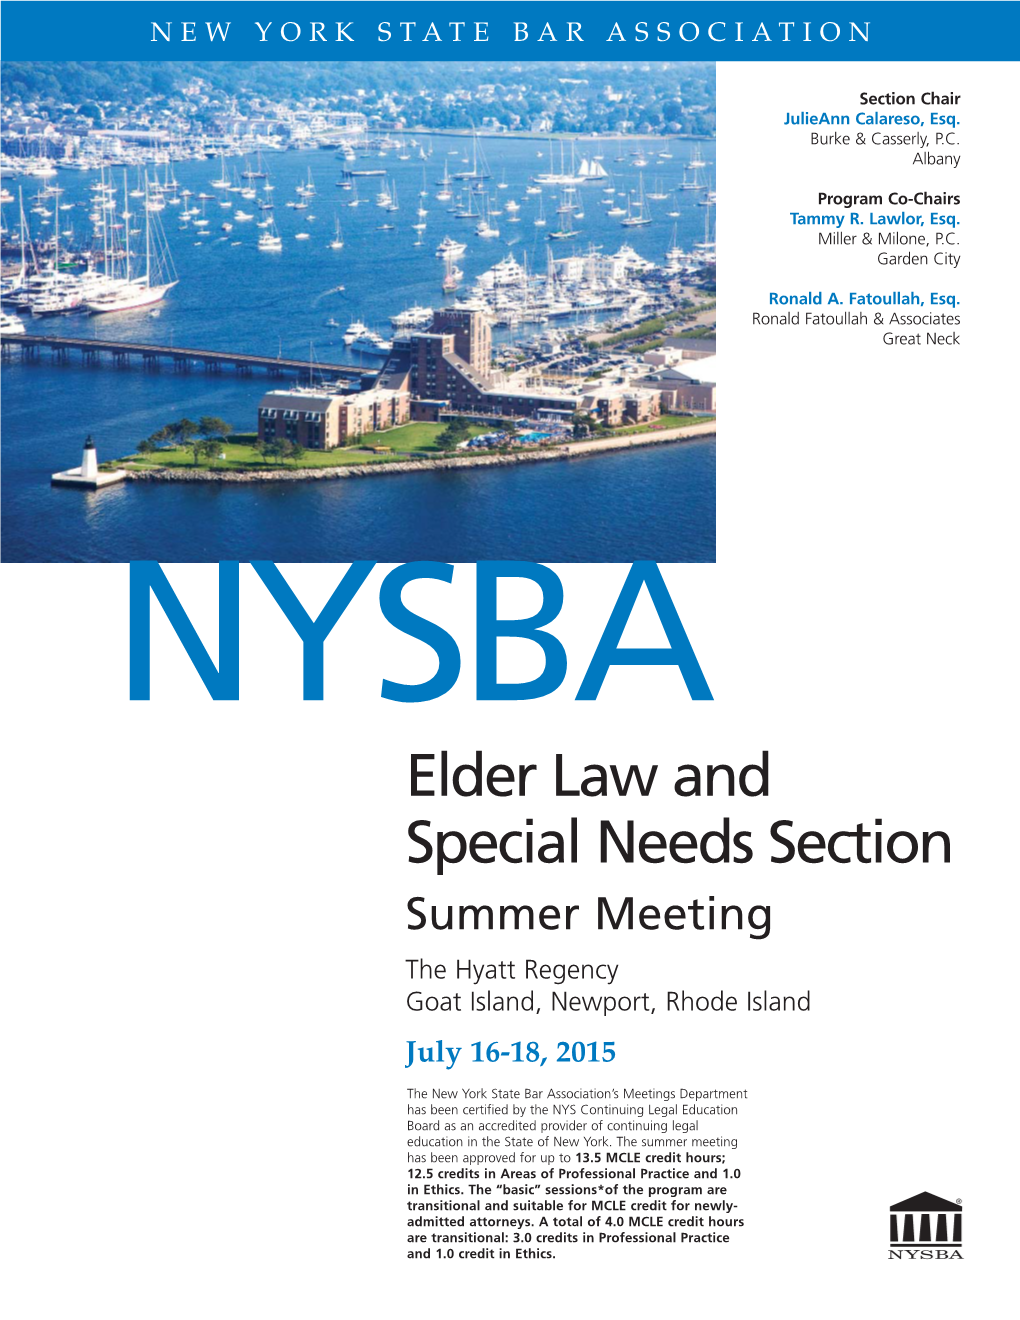 Elder Law and Special Needs Section Summer Meeting the Hyatt Regency Goat Island, Newport, Rhode Island July 16-18, 2015